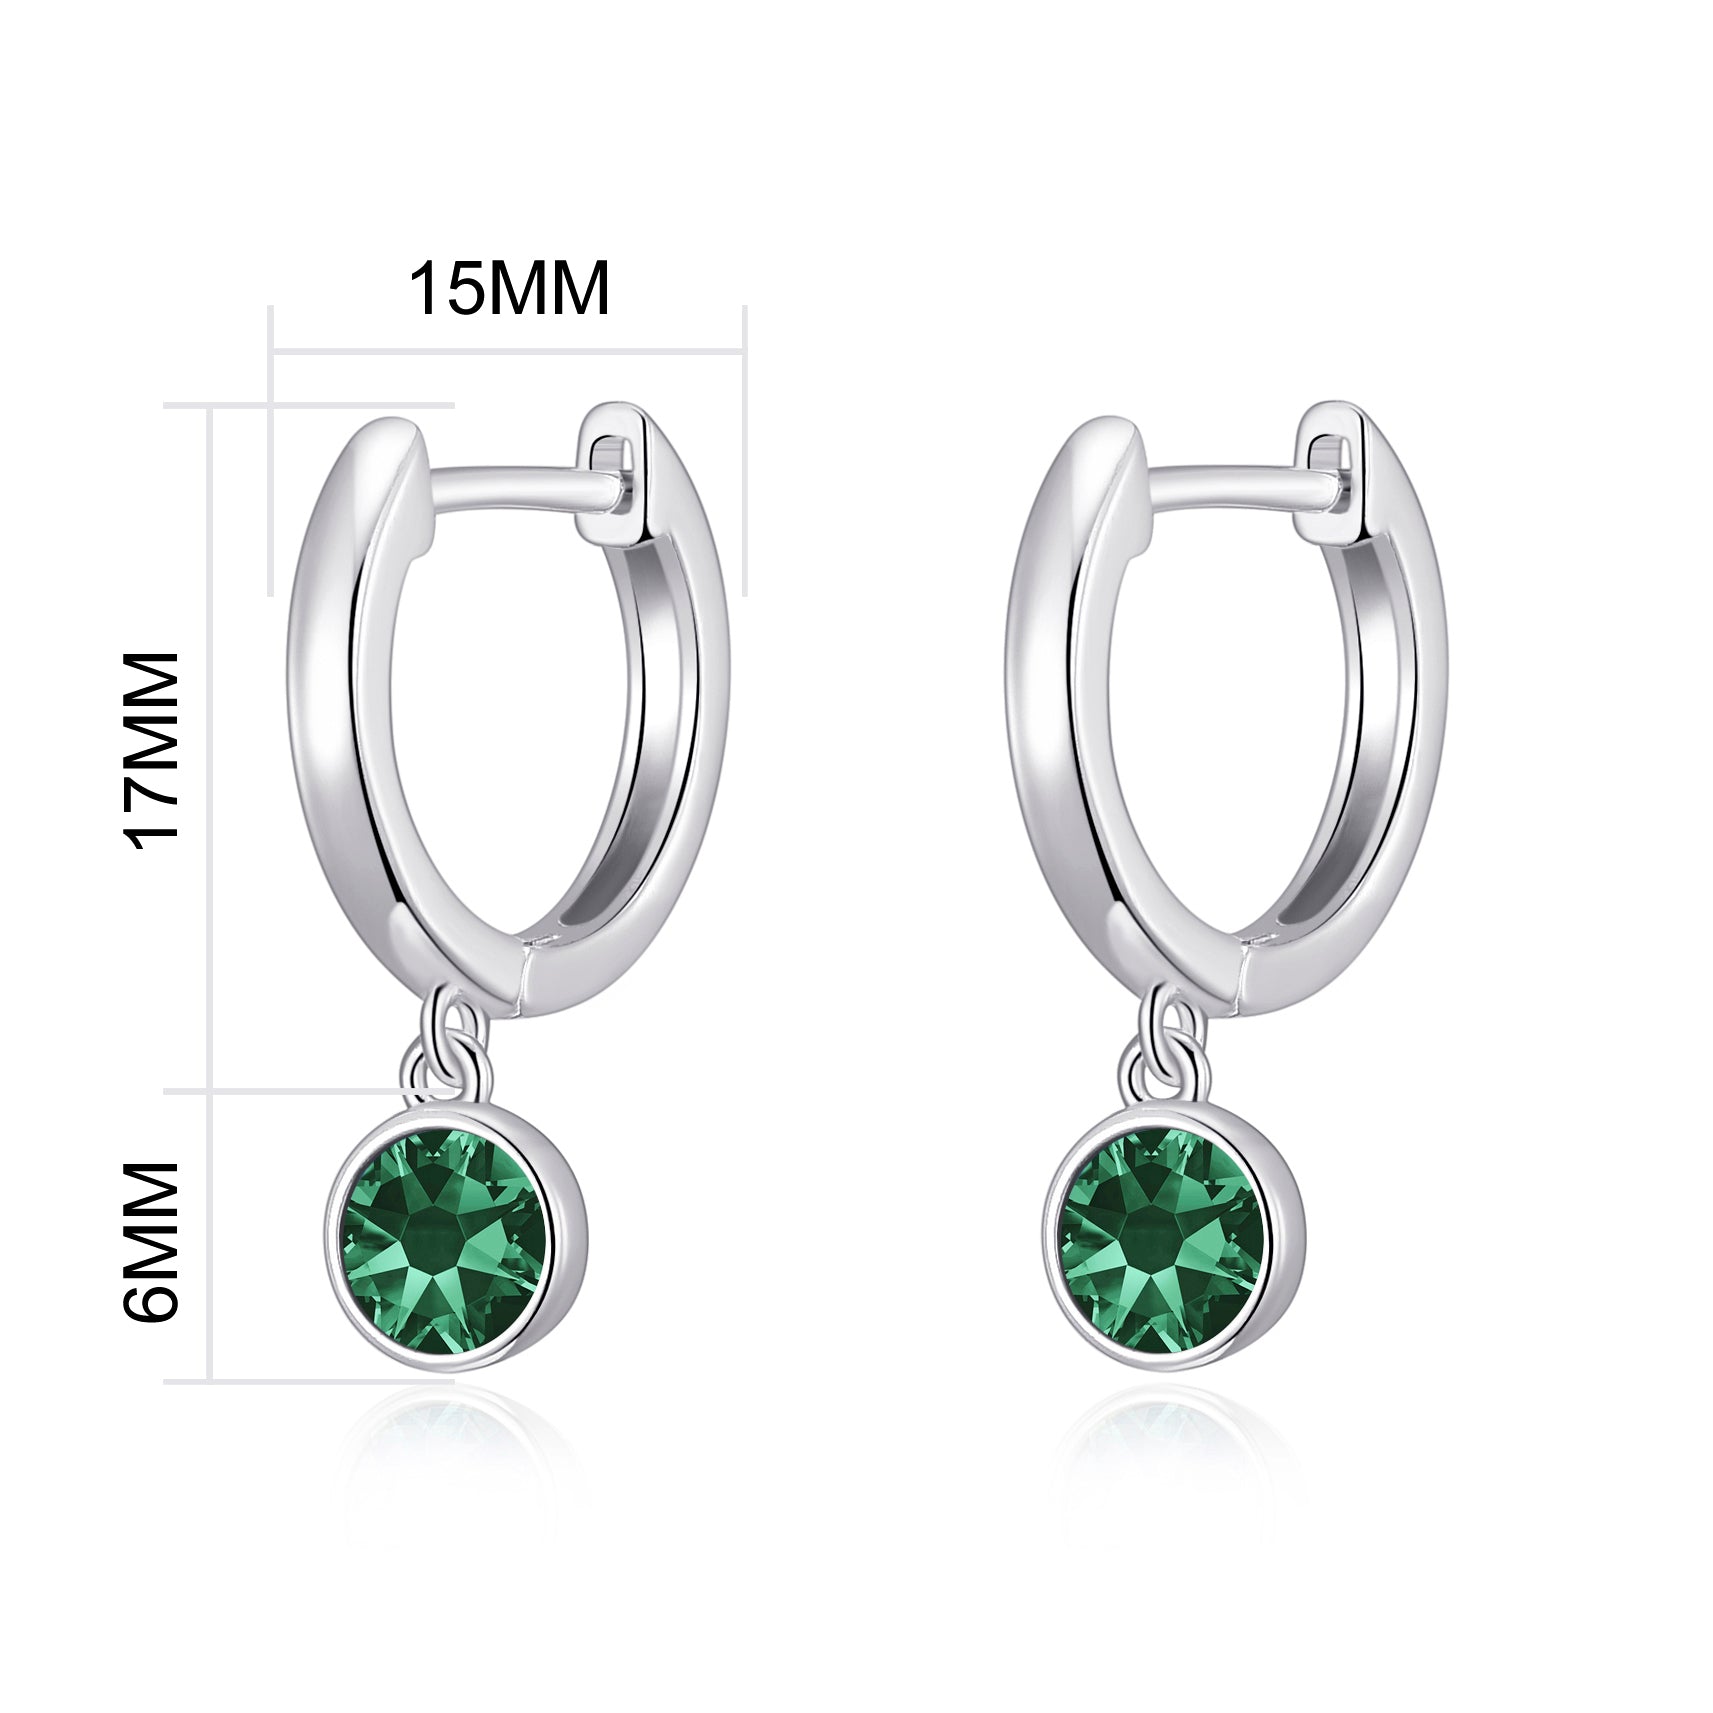 May Birthstone Hoop Earrings Created with Emerald Zircondia® Crystals